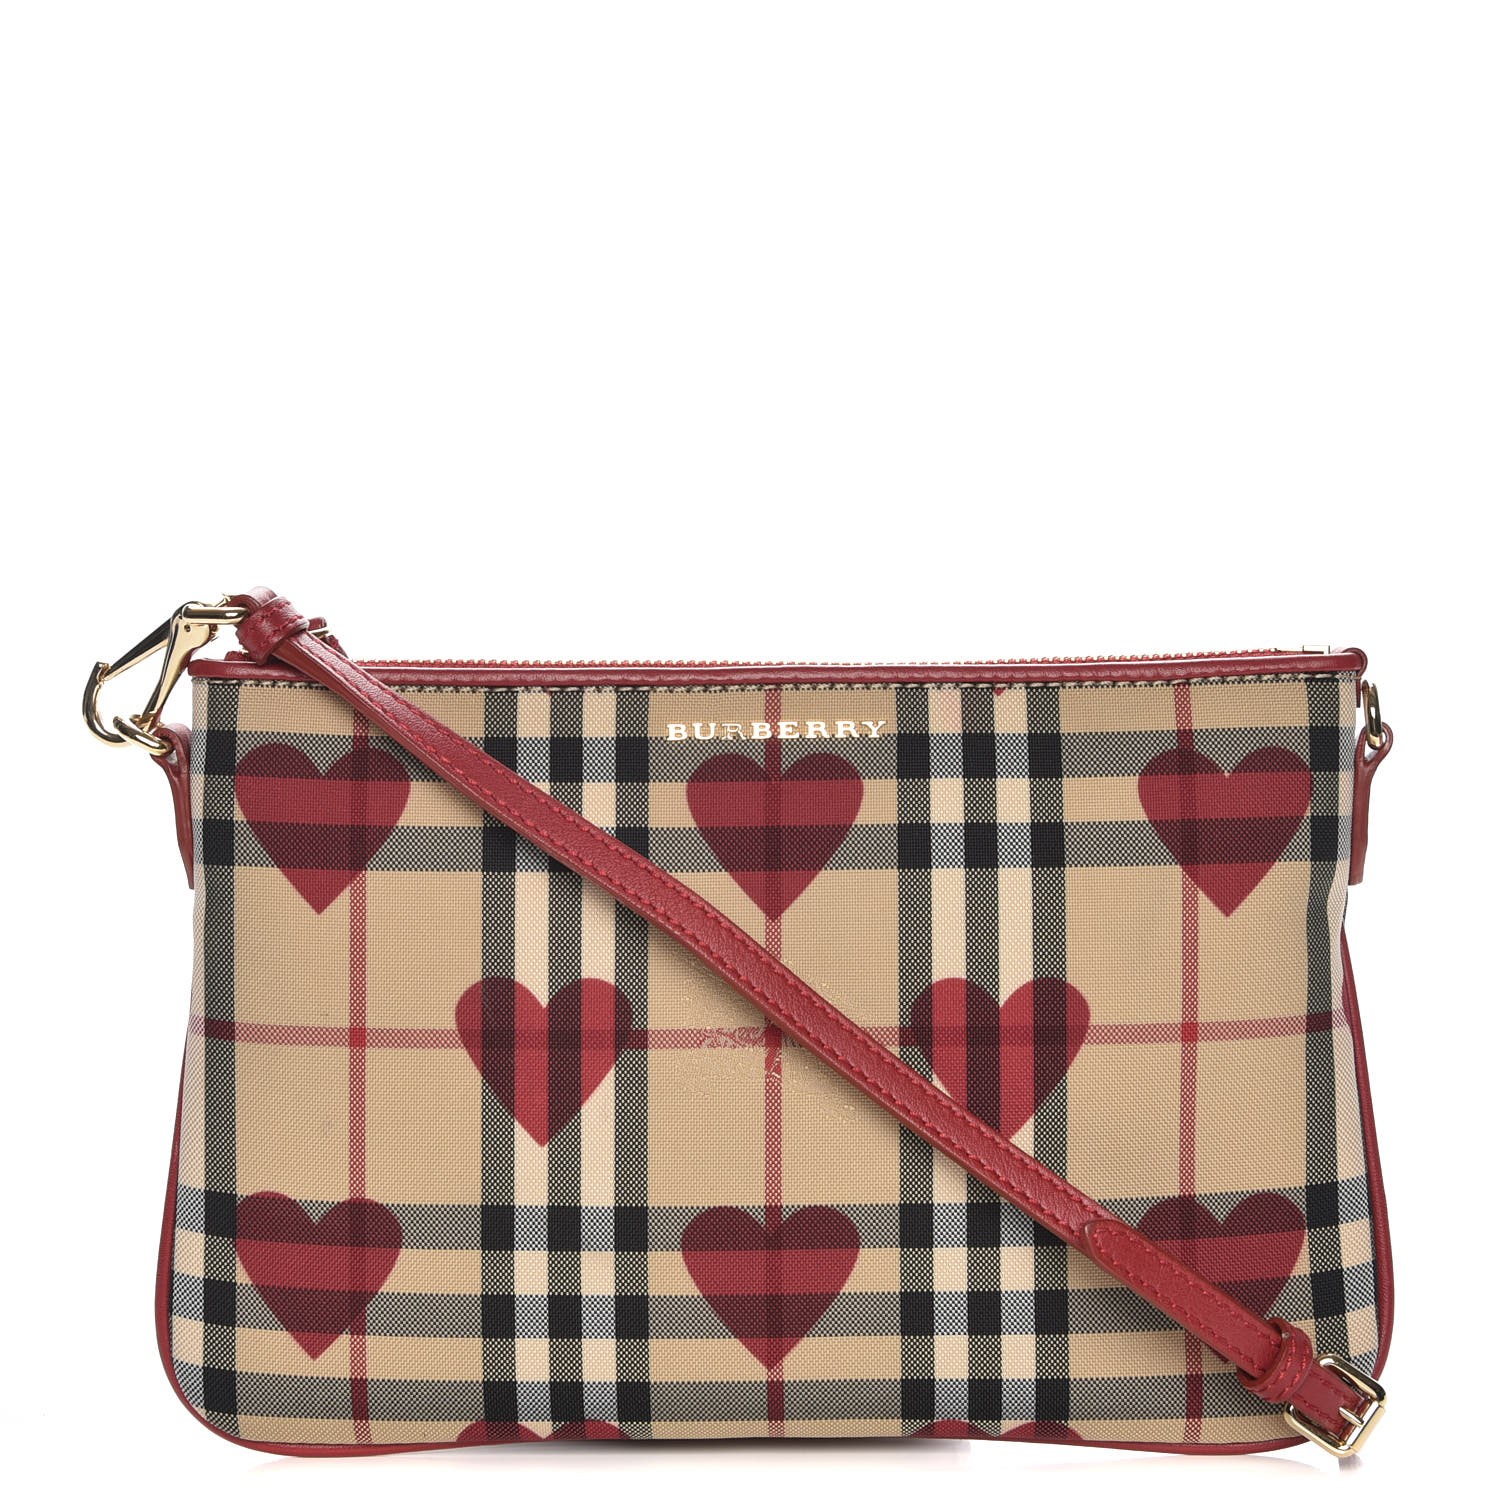 burberry heart purse